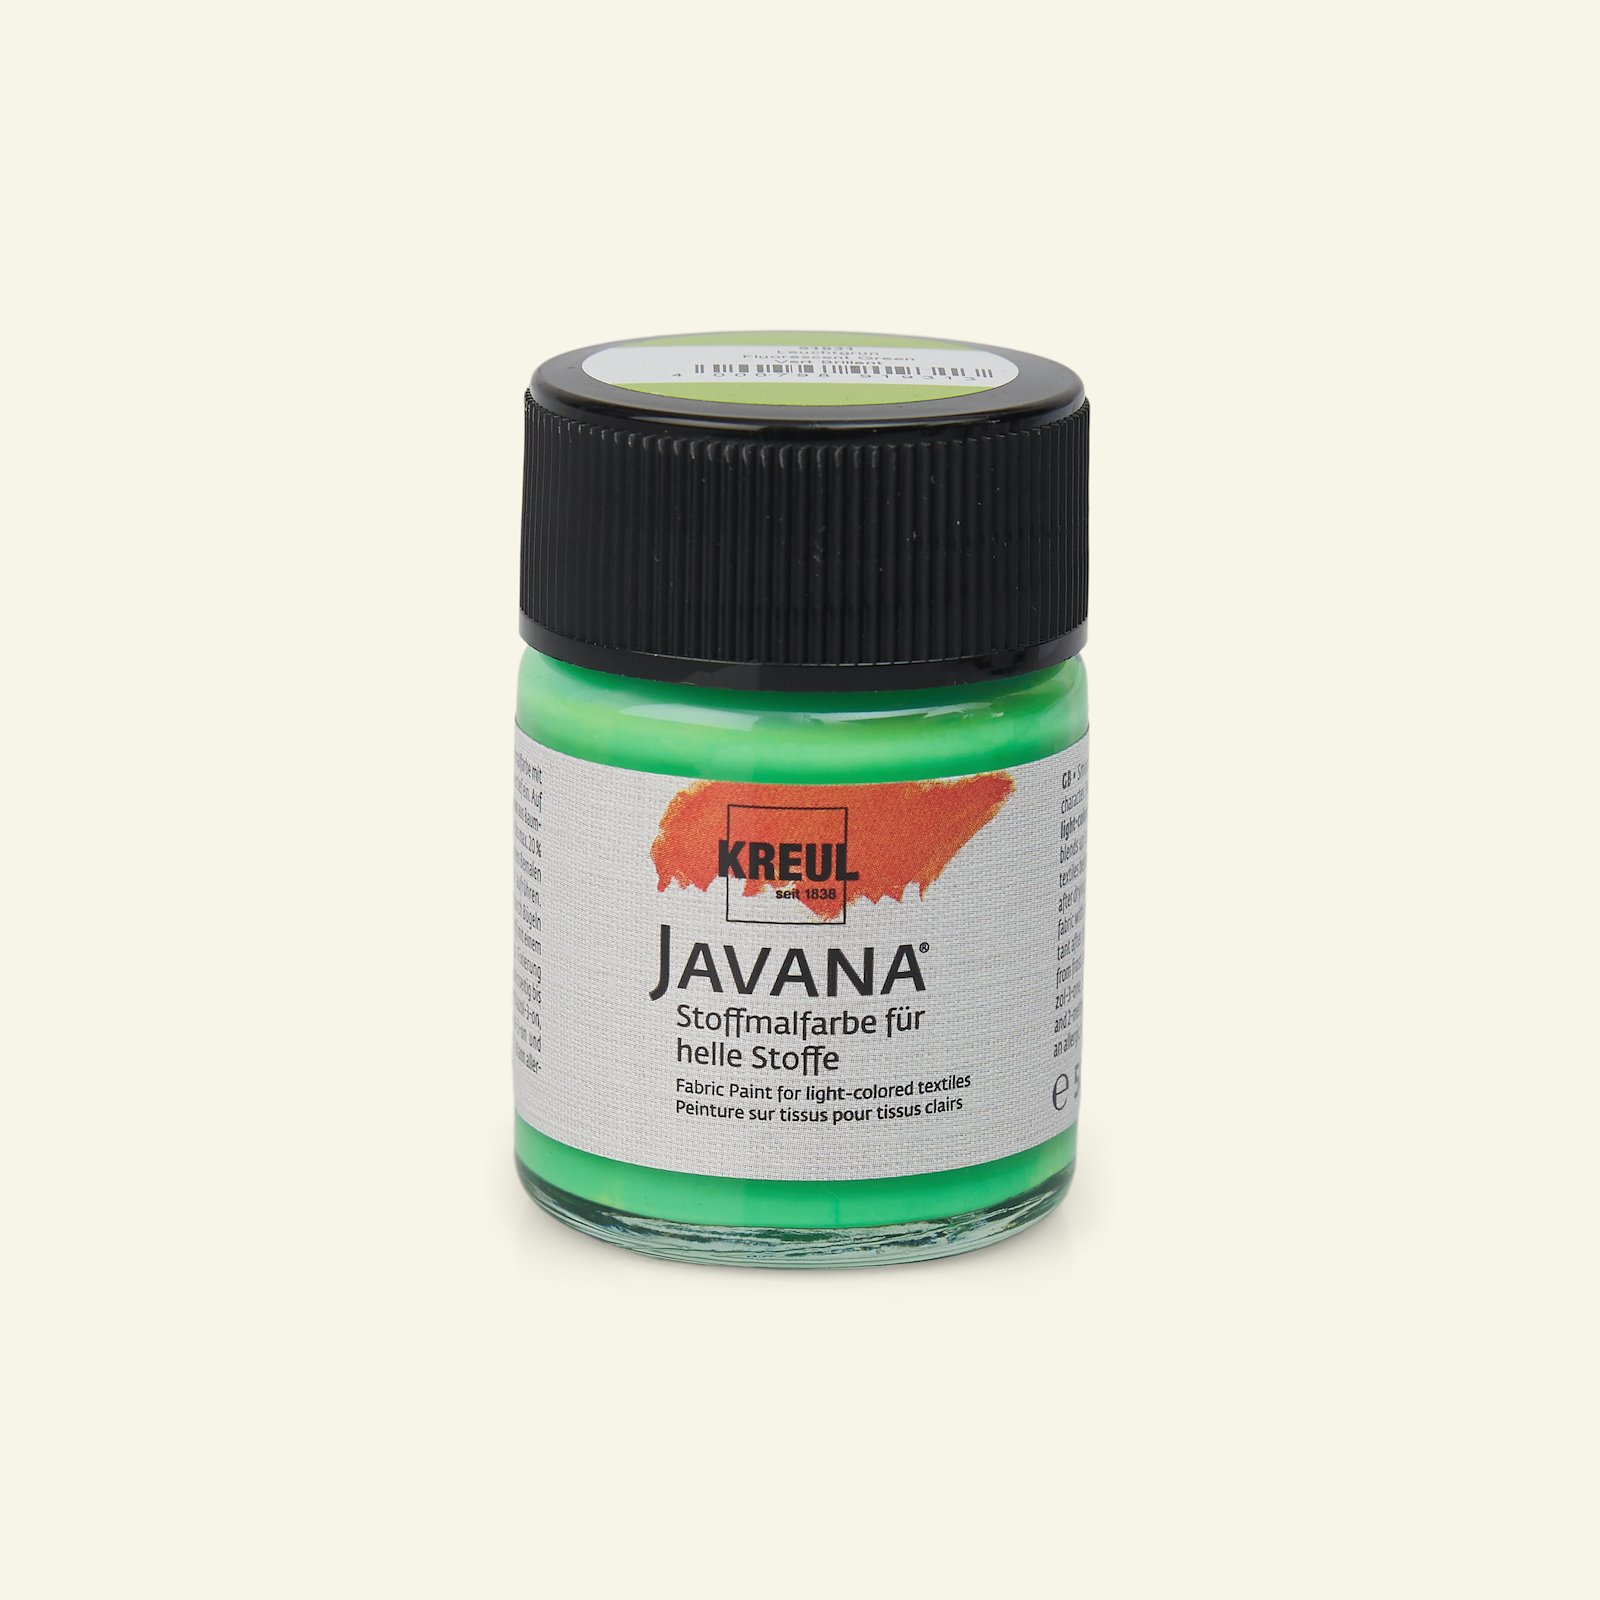 Javana textilfärg klargrön 50ml 29622_pack_b